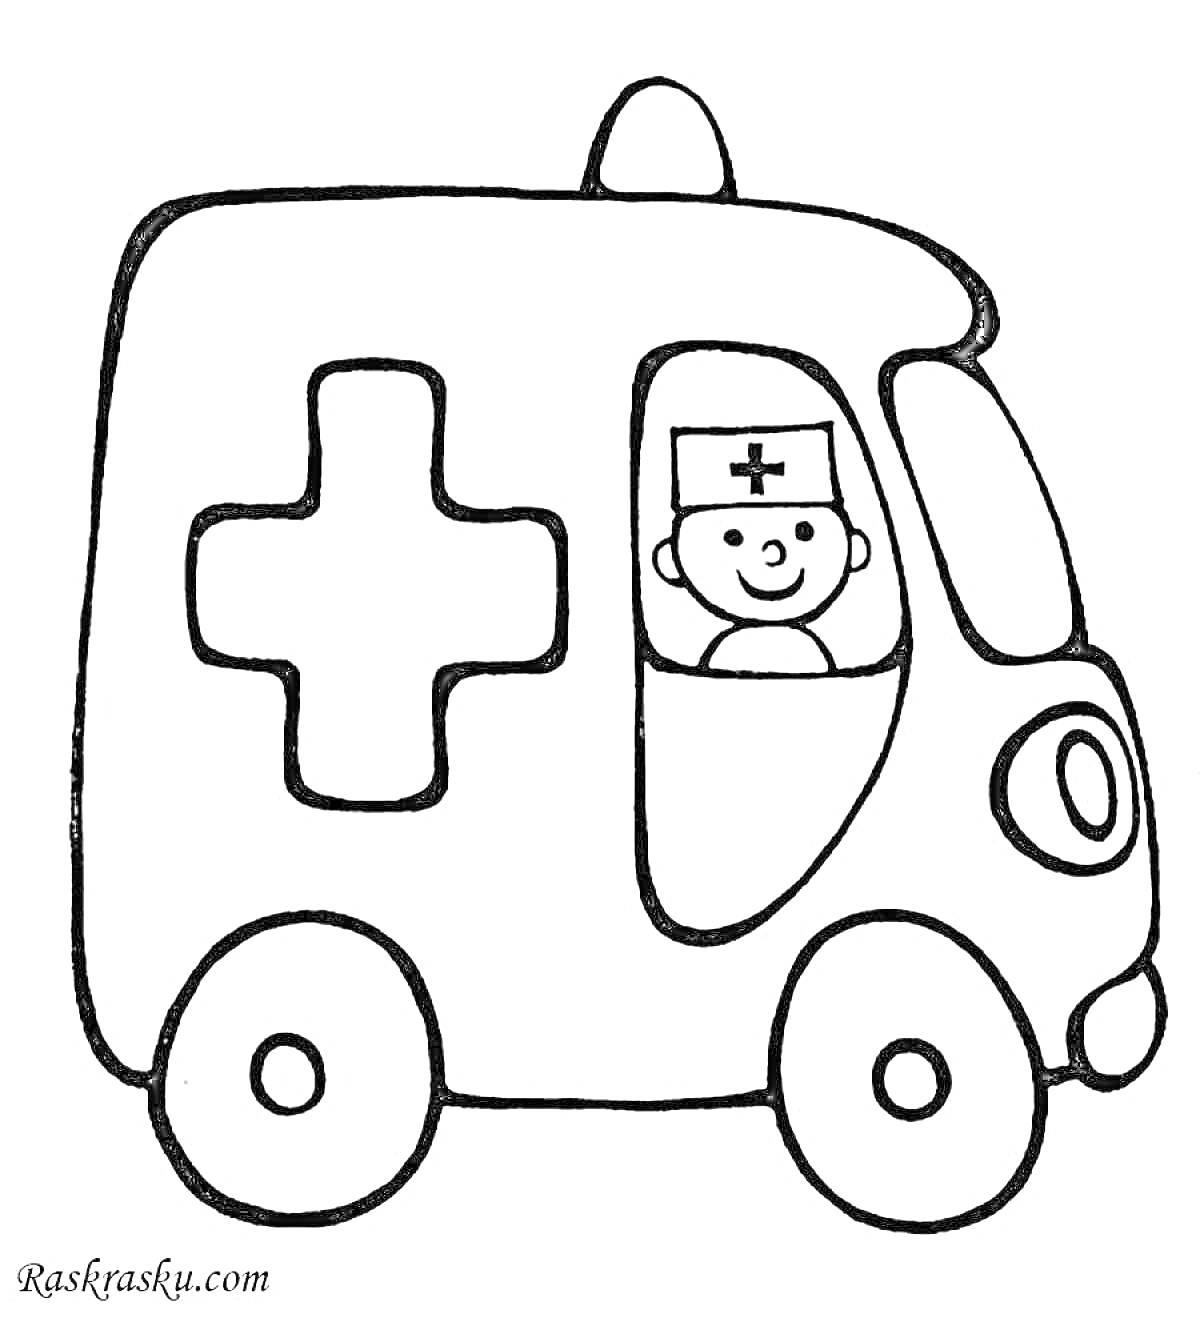 Раскраска Машина скорой помощи с водителем в форме